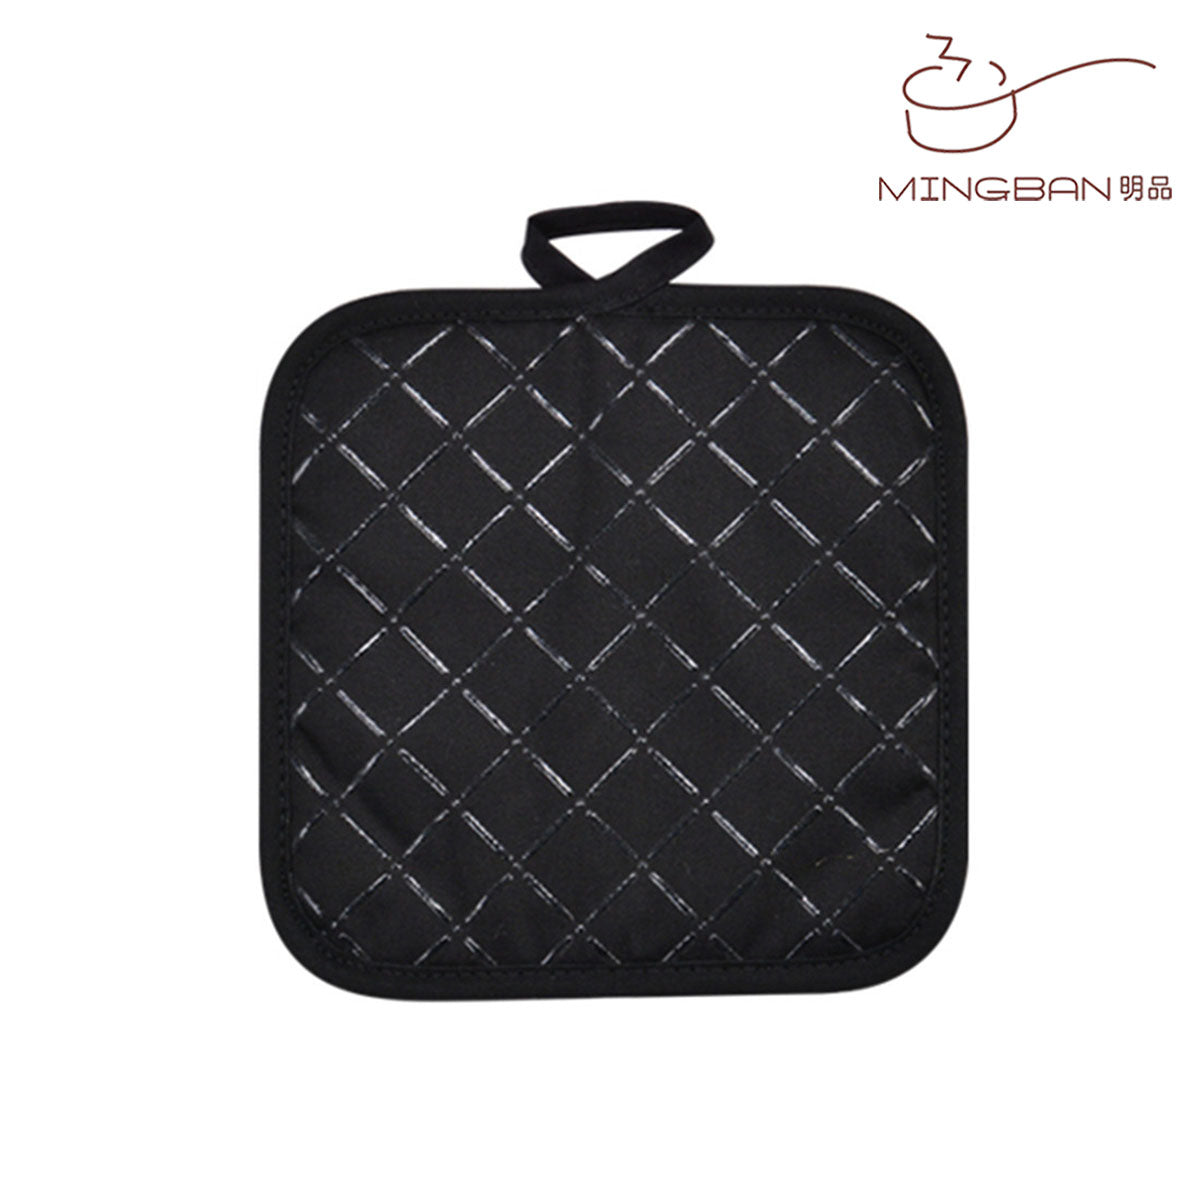 Checkered Silicone Strip Potholder Pad - Black